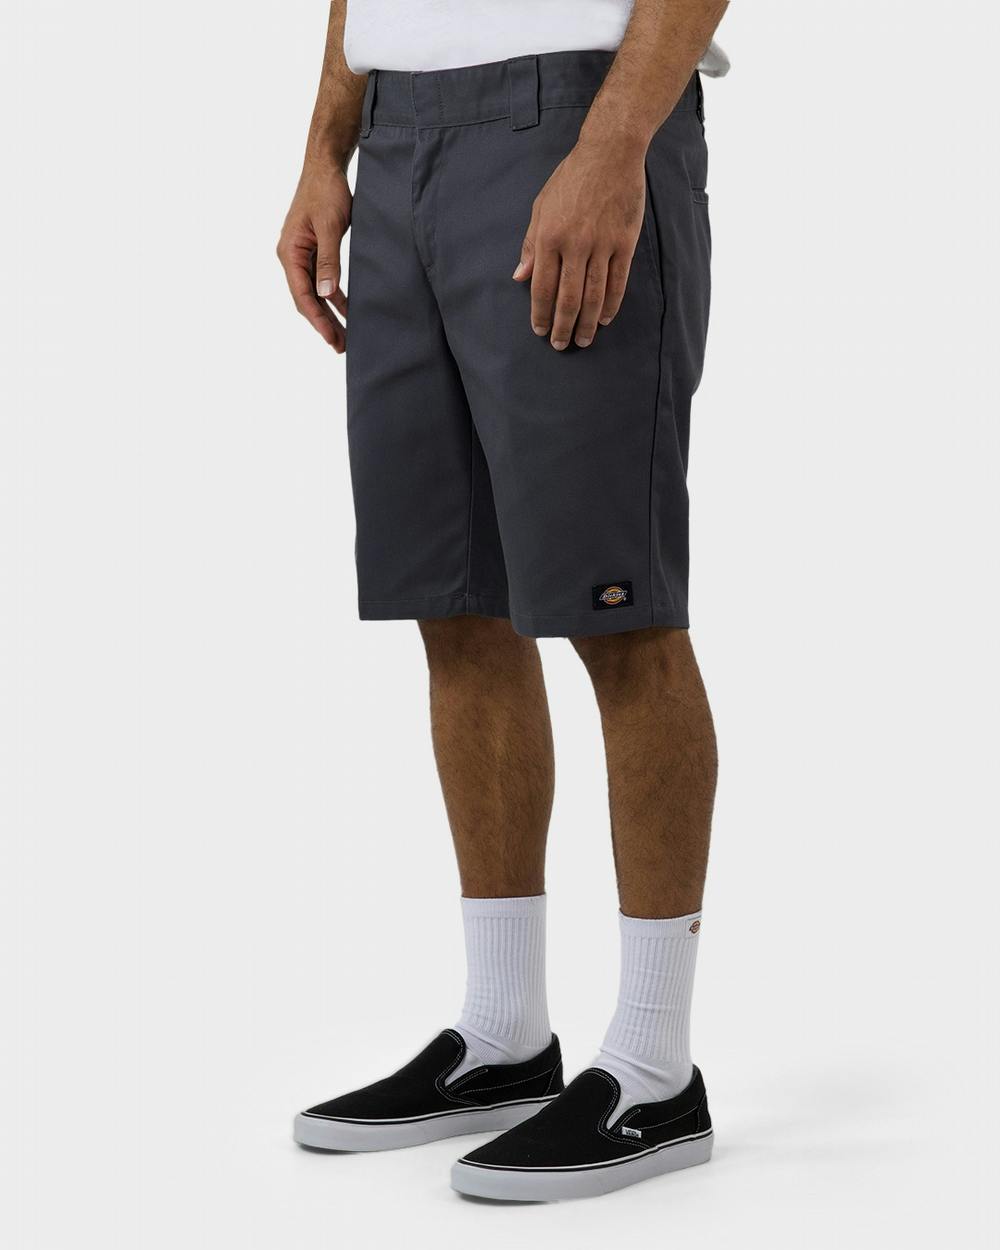 Dickies Men's Utility Shorts, Everyday Five-Pocket Design, 13 Inseam Shorts